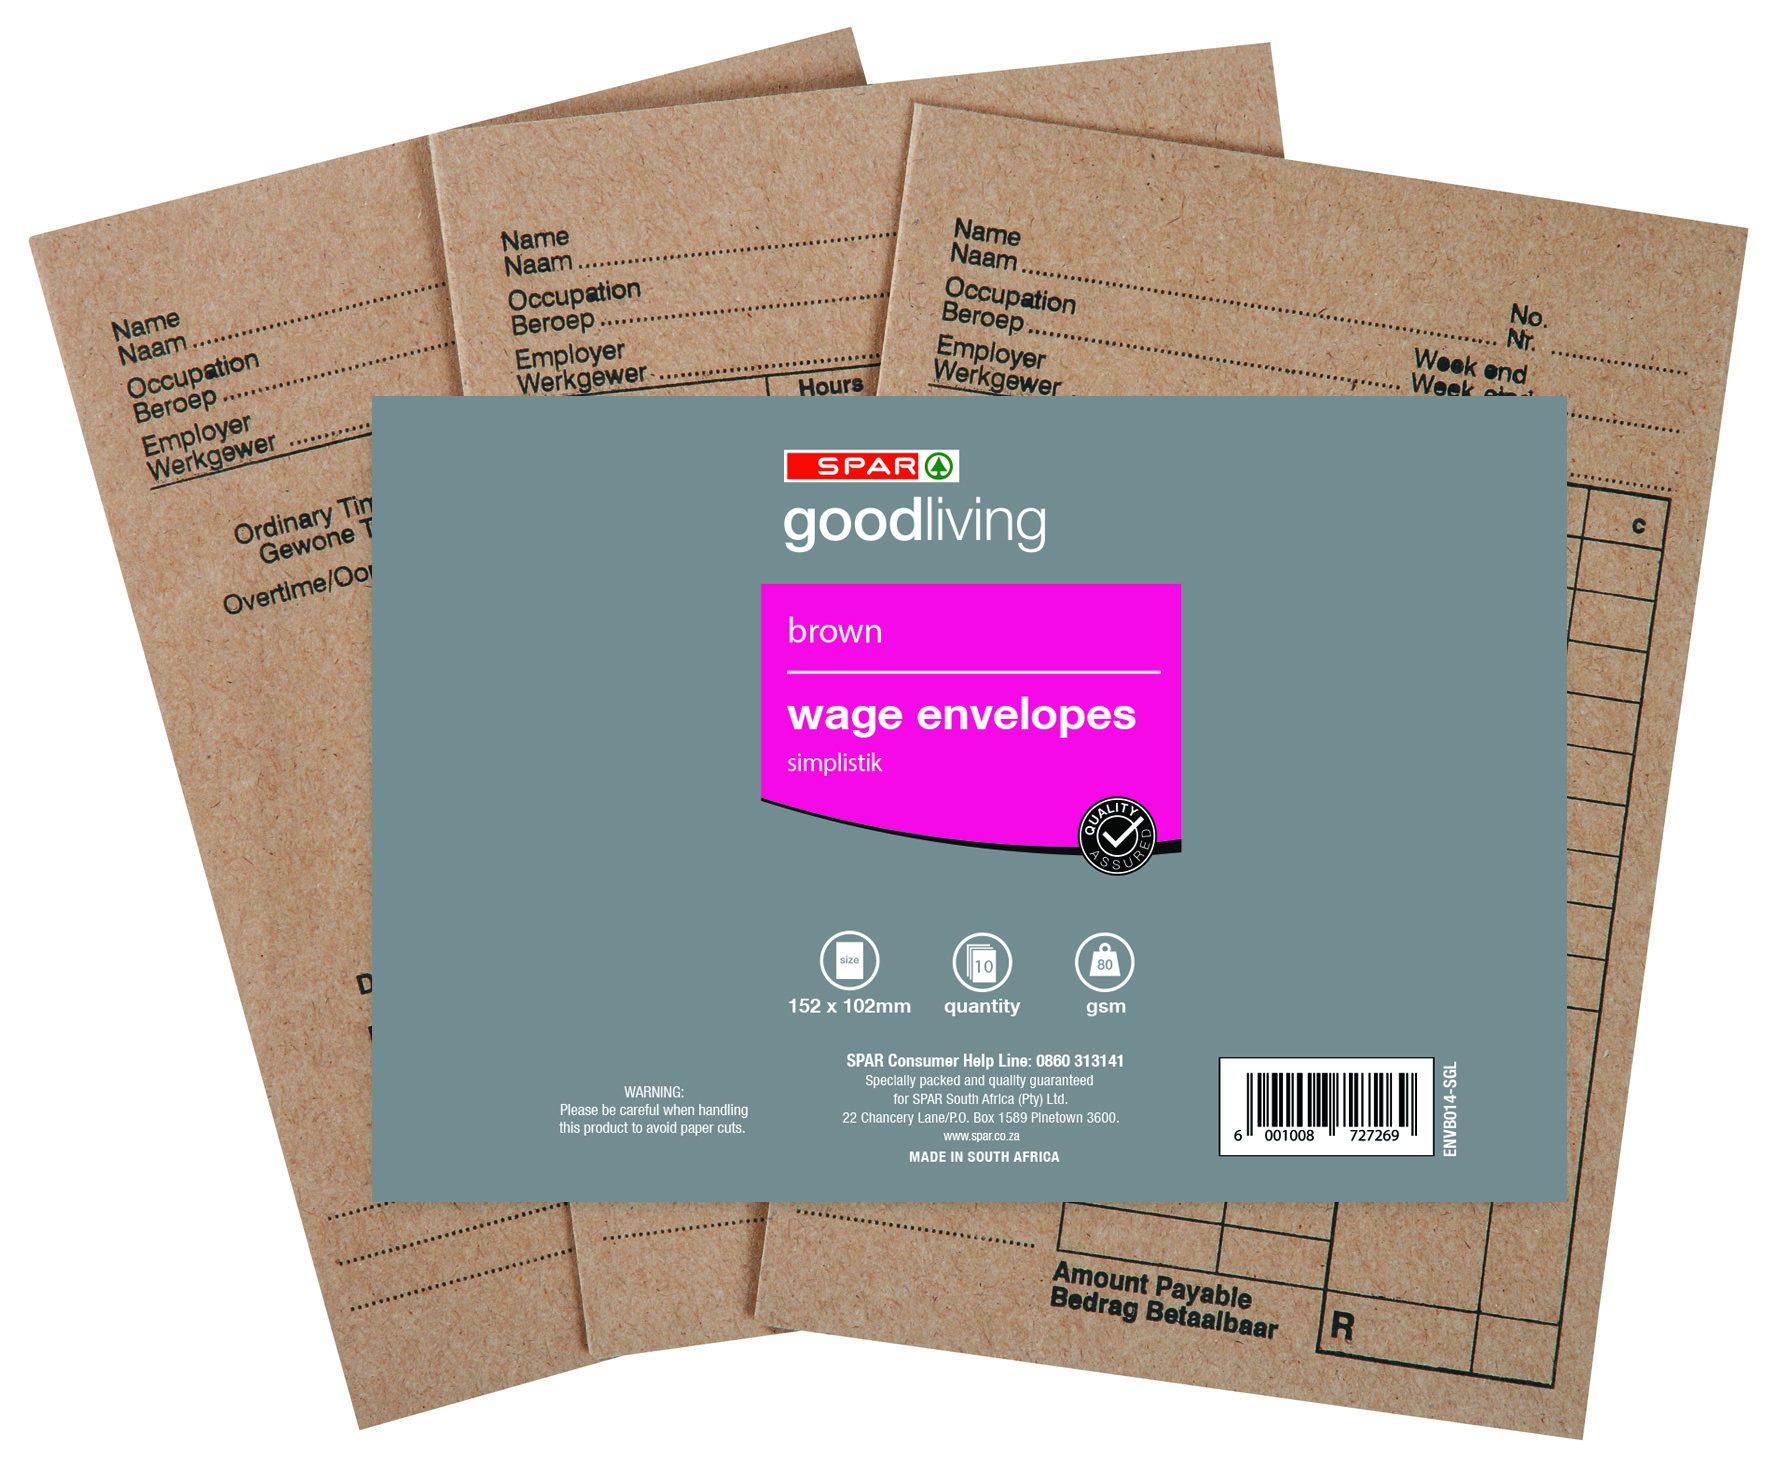 envelopes  - wage simplistik 50 piece